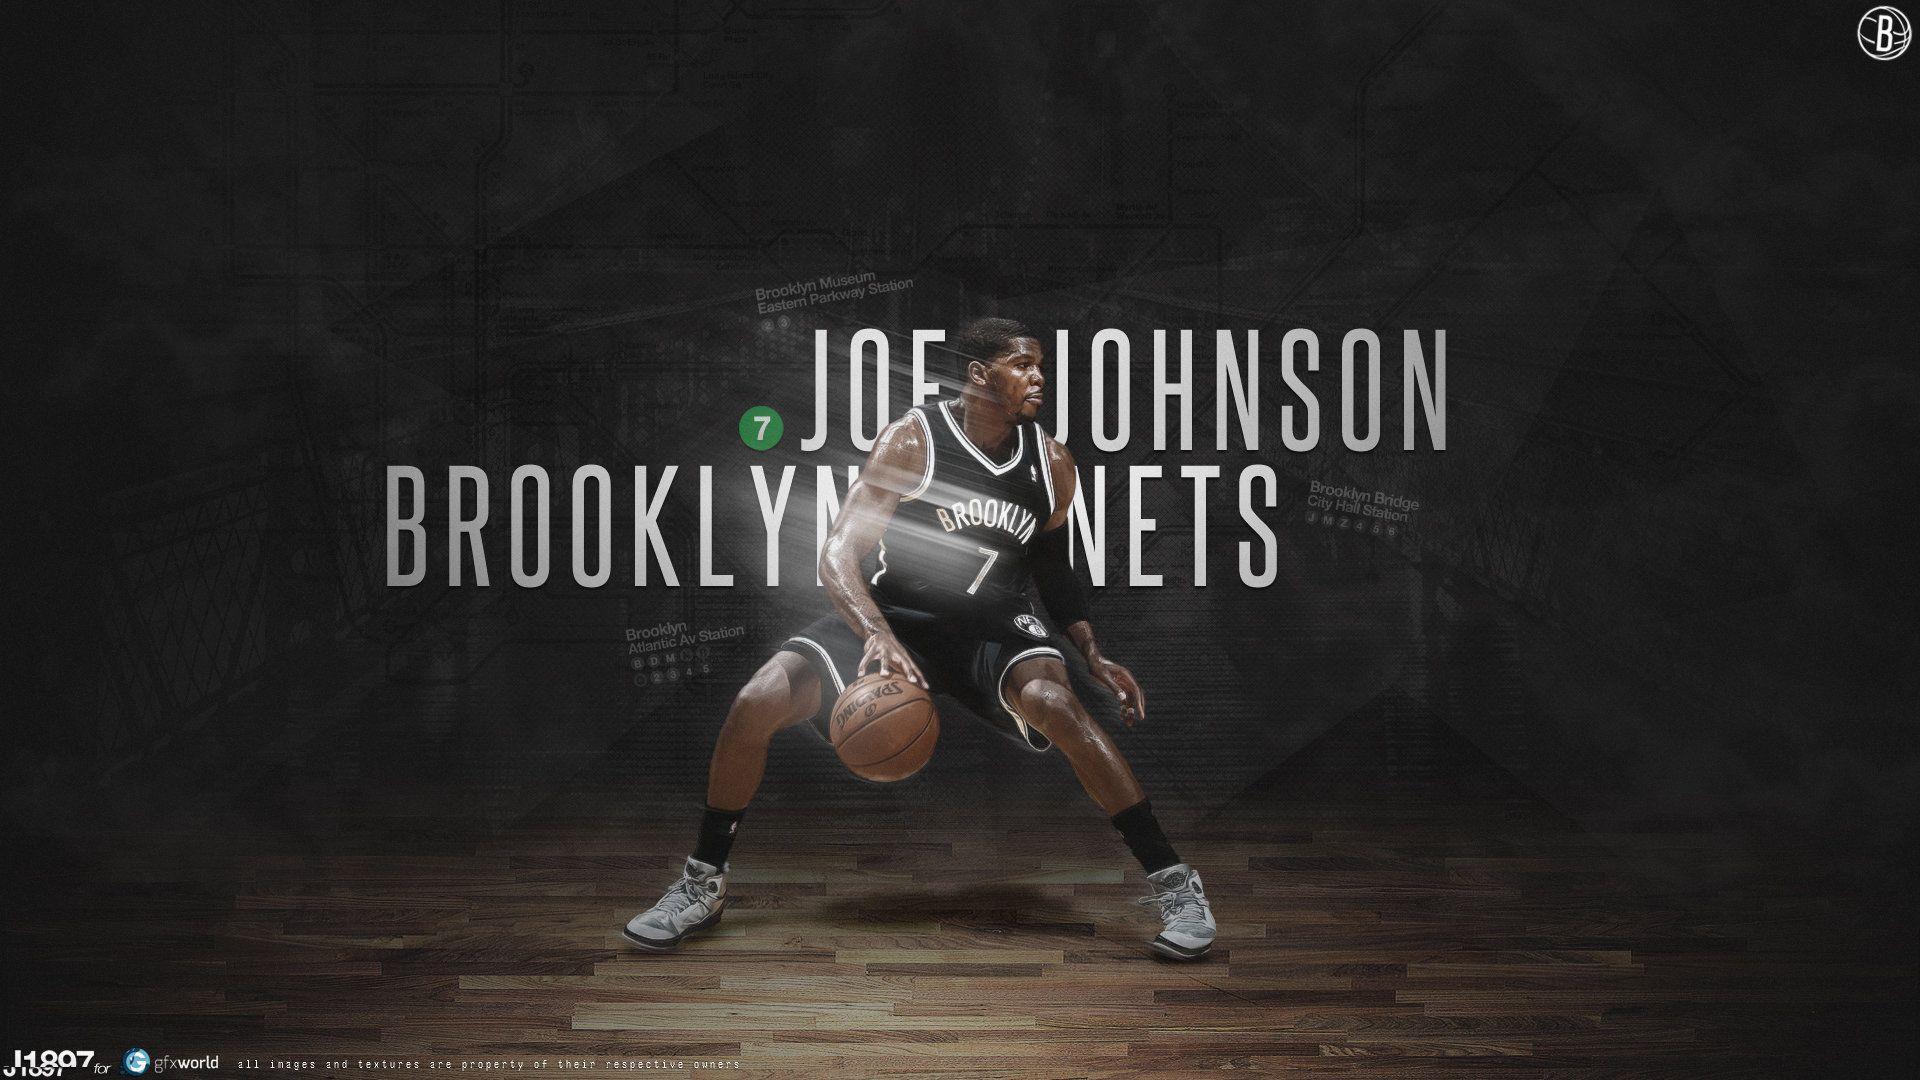 Brooklyn Nets. Full HD Widescreen wallpaper for desktop